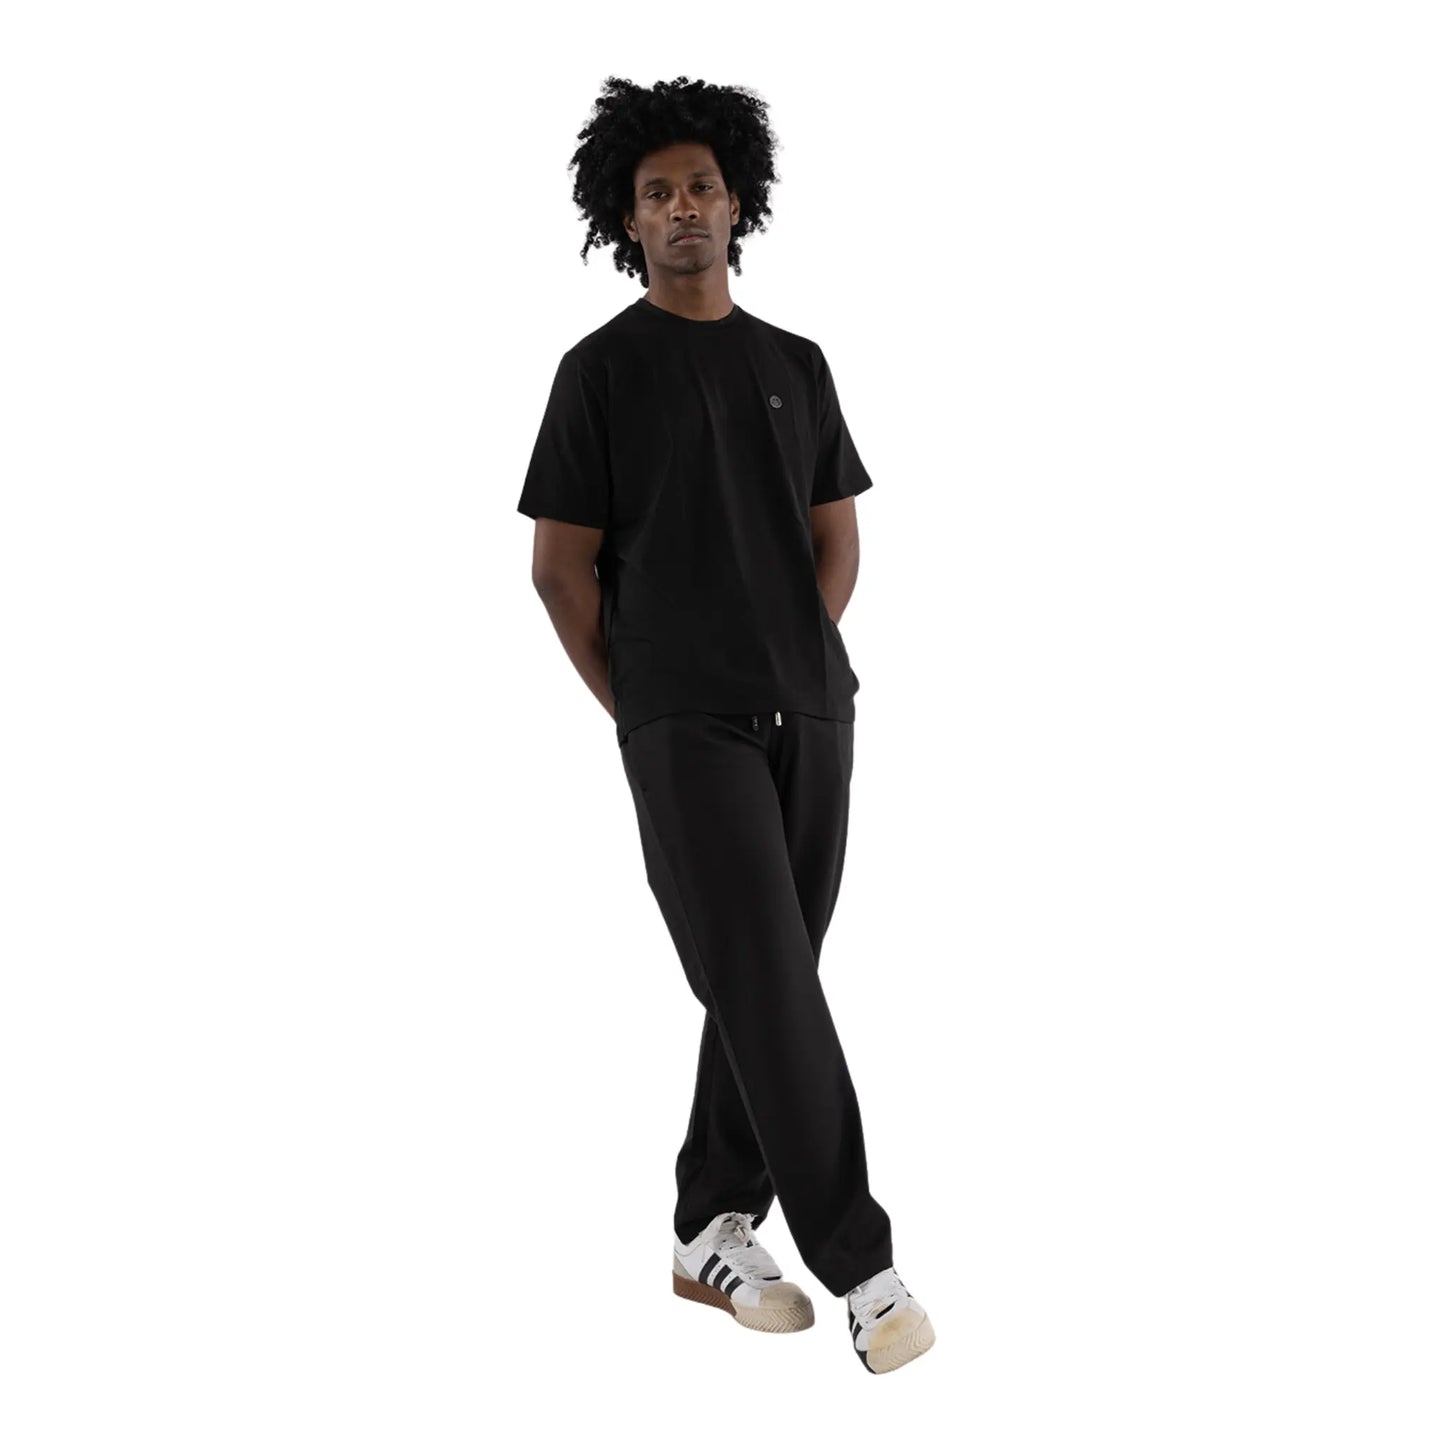 L’Homme Moderne Smiley Regular Fit T-shirt worn by black man front view